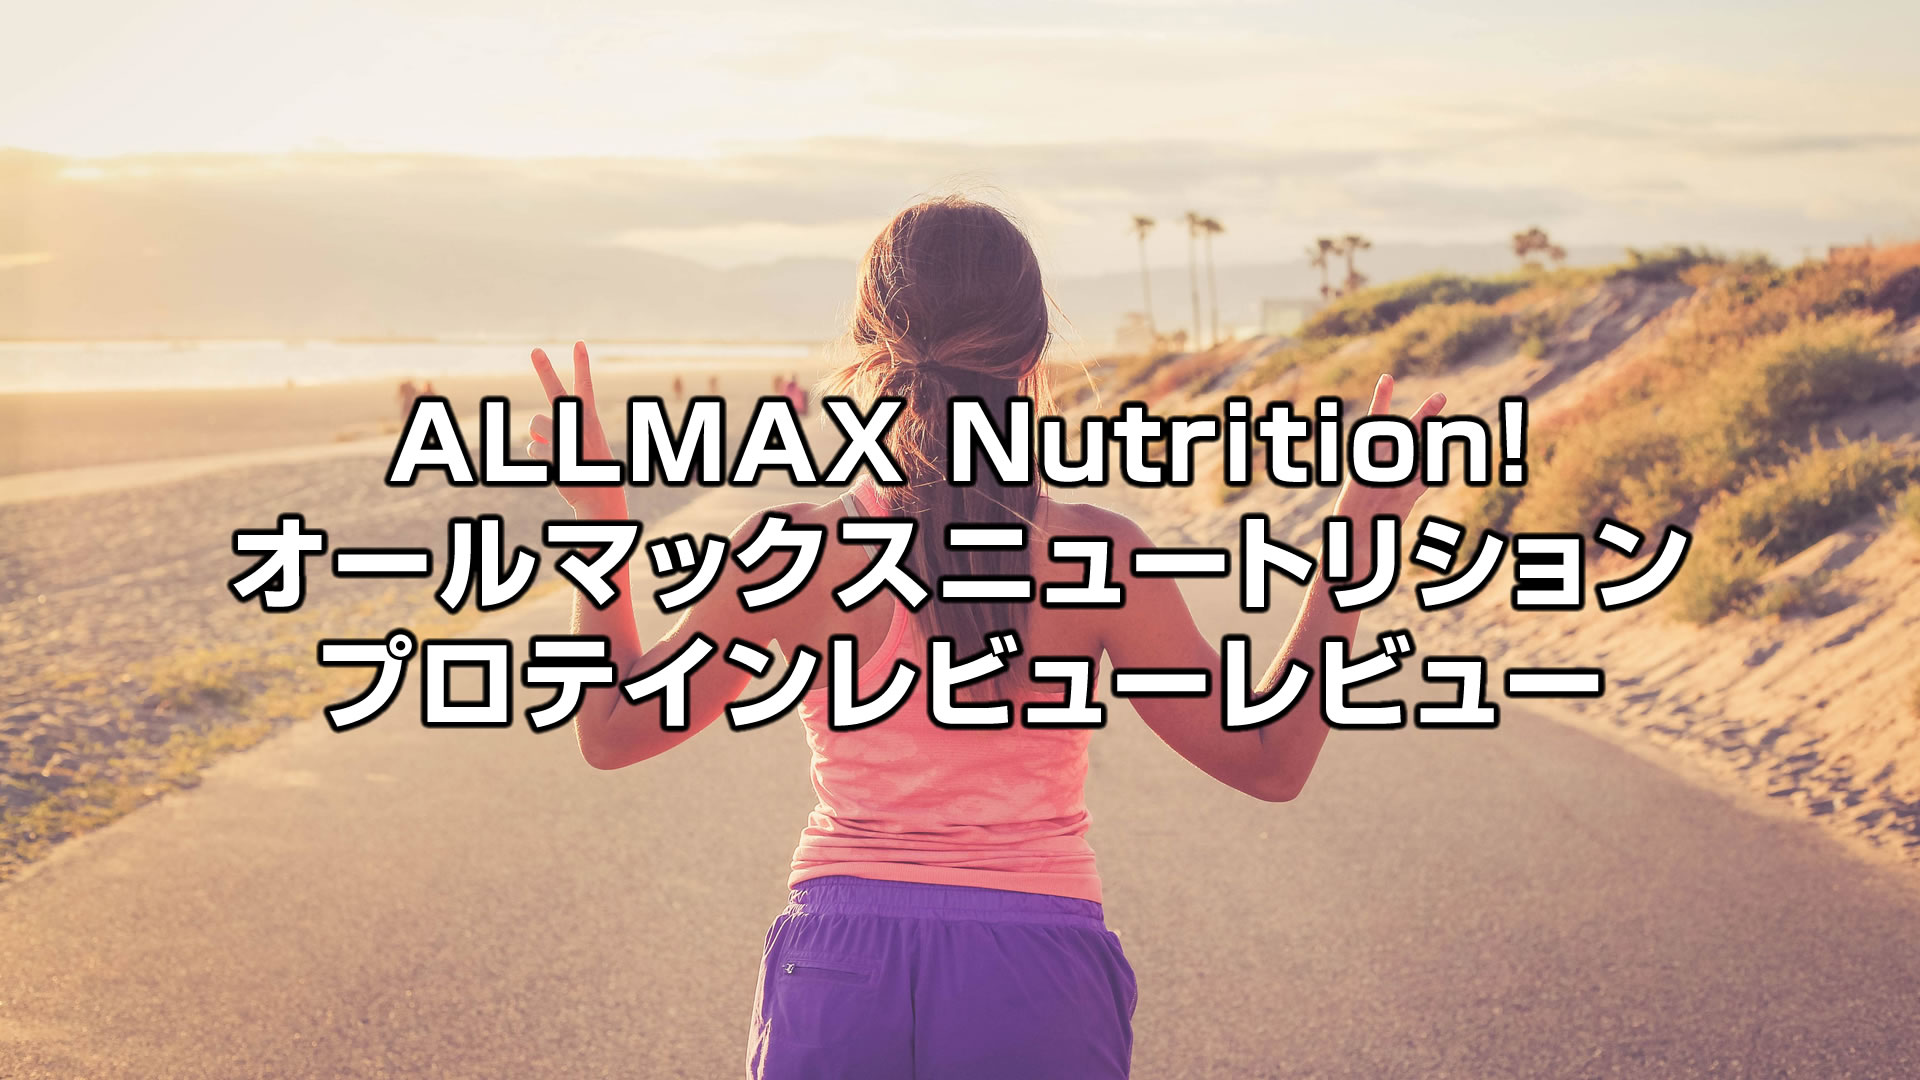 ALLMAX Nutritionクイックマスは脂肪をつけずに体重増加と筋肉増強が目的のプロテイン[iHerb]